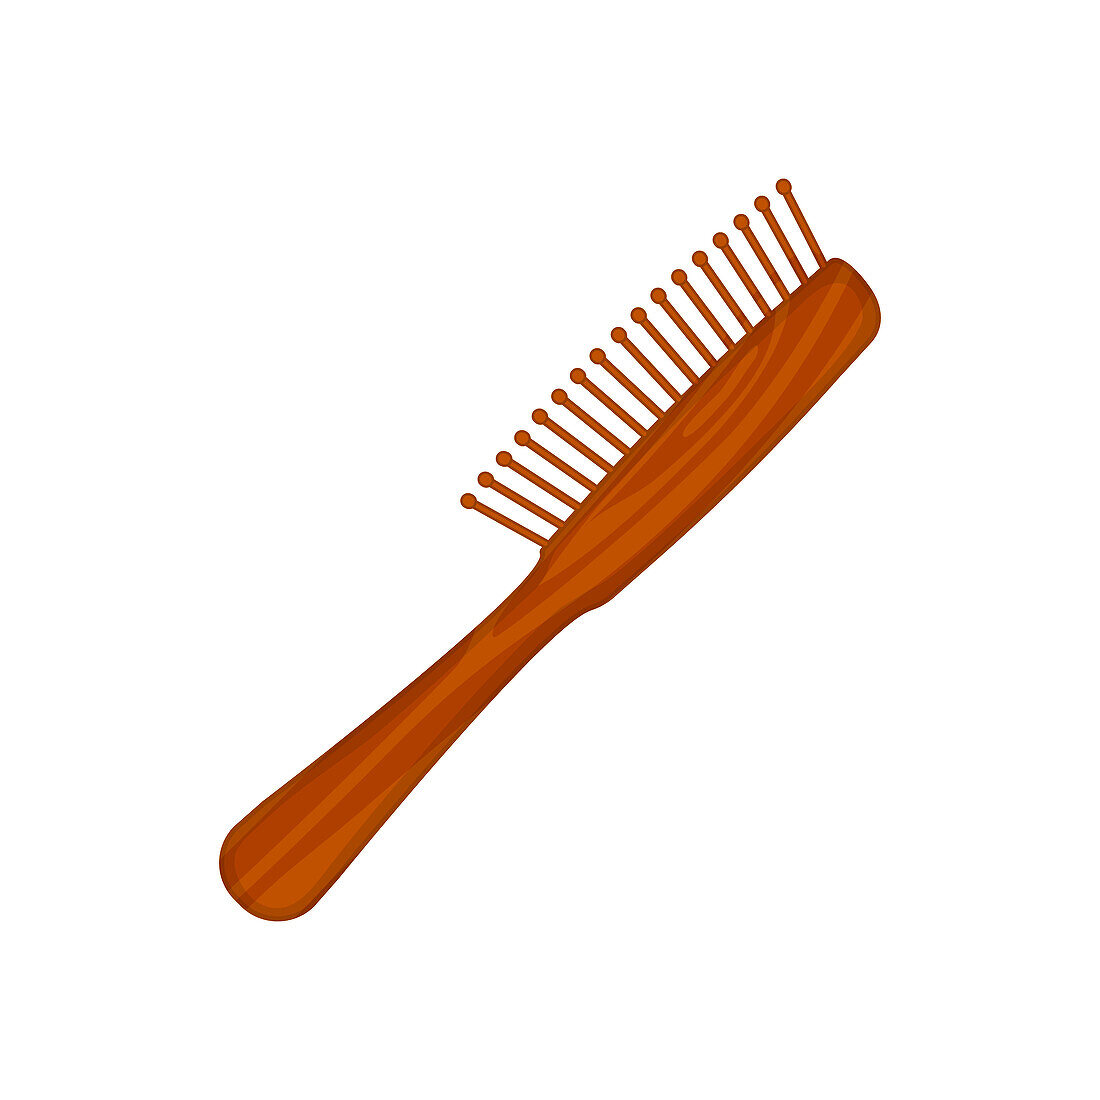 Hair care, conceptual illustration